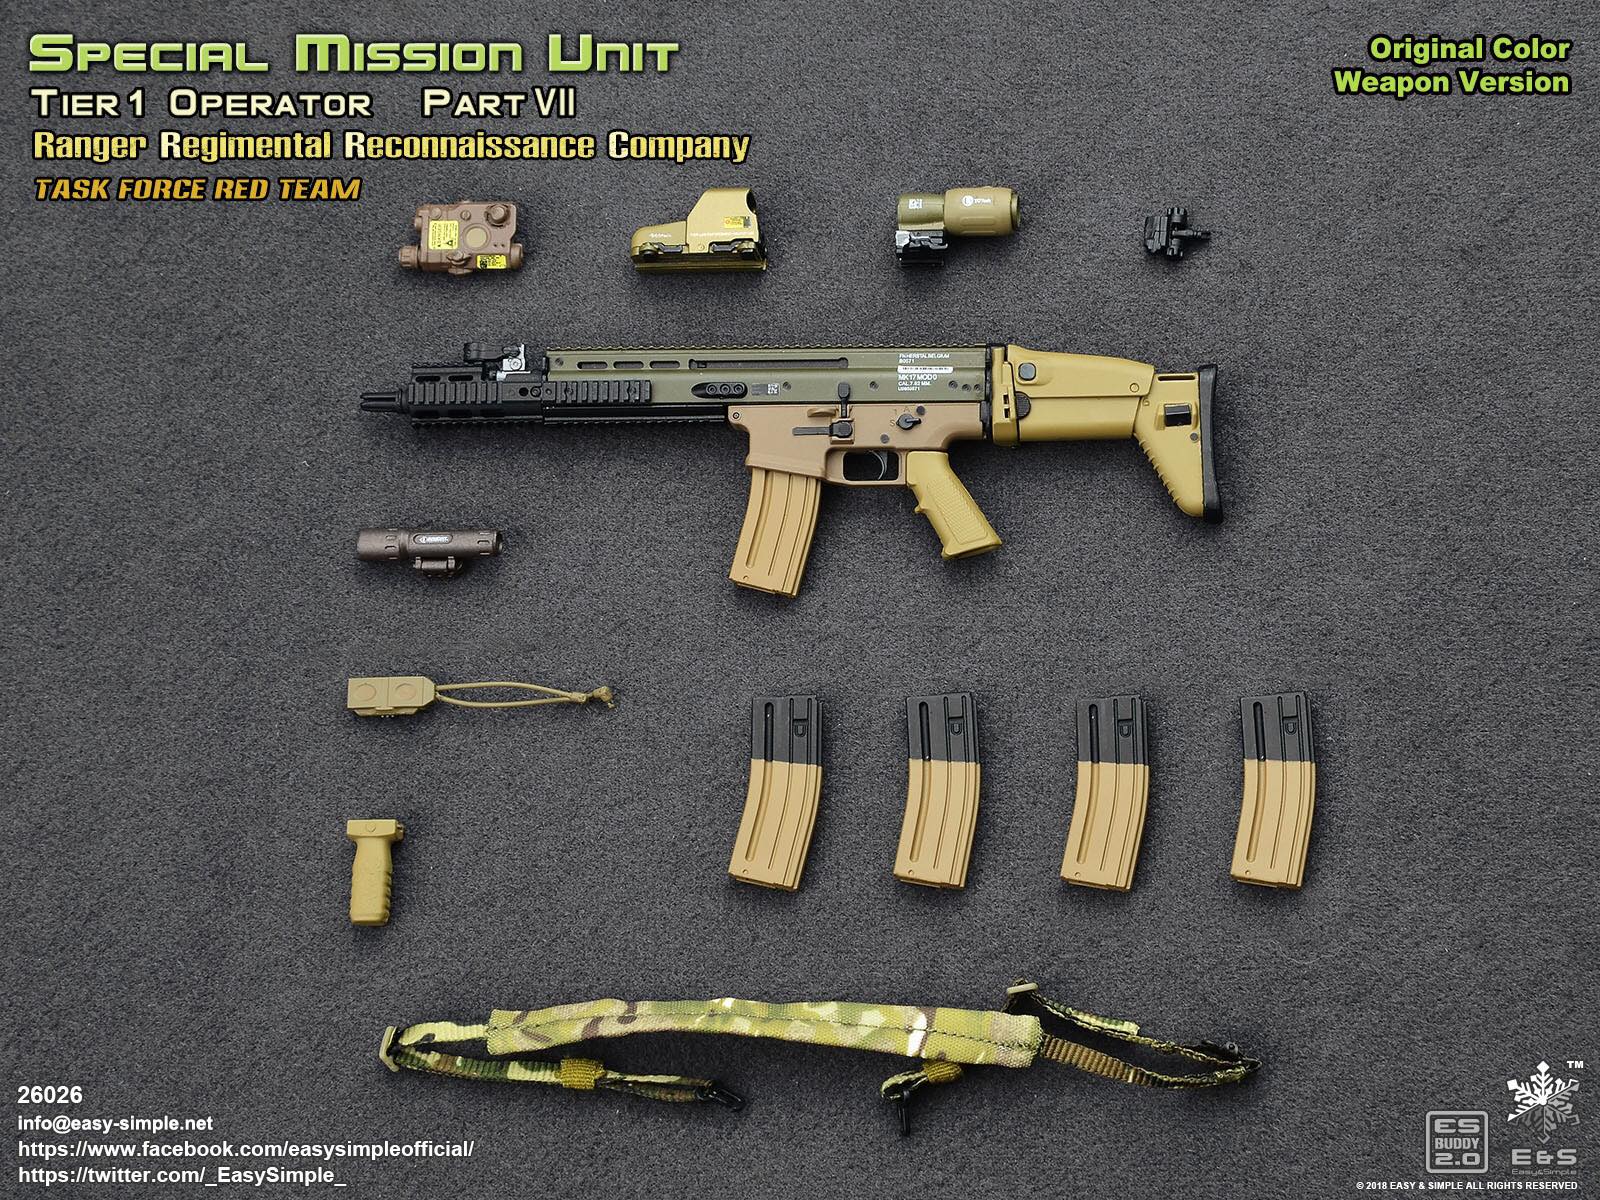 Easy &amp; Simple - 26026 - Special Mission Unit Tier-1 Operator Part VII - Ranger Regimental Reconnaissance Company (Original Color Weapon) - Marvelous Toys